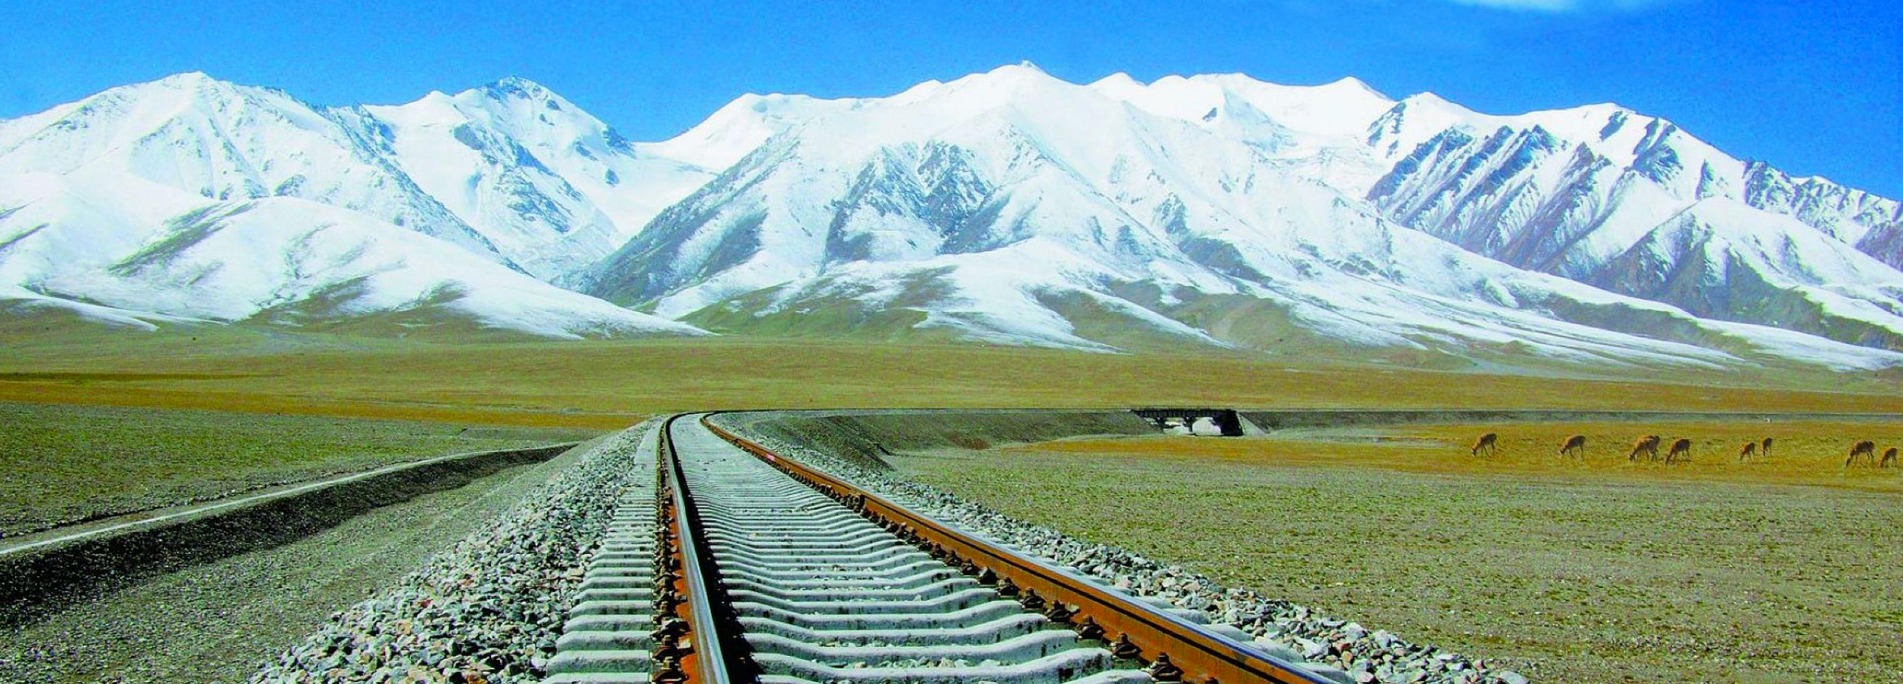 tibet train tours